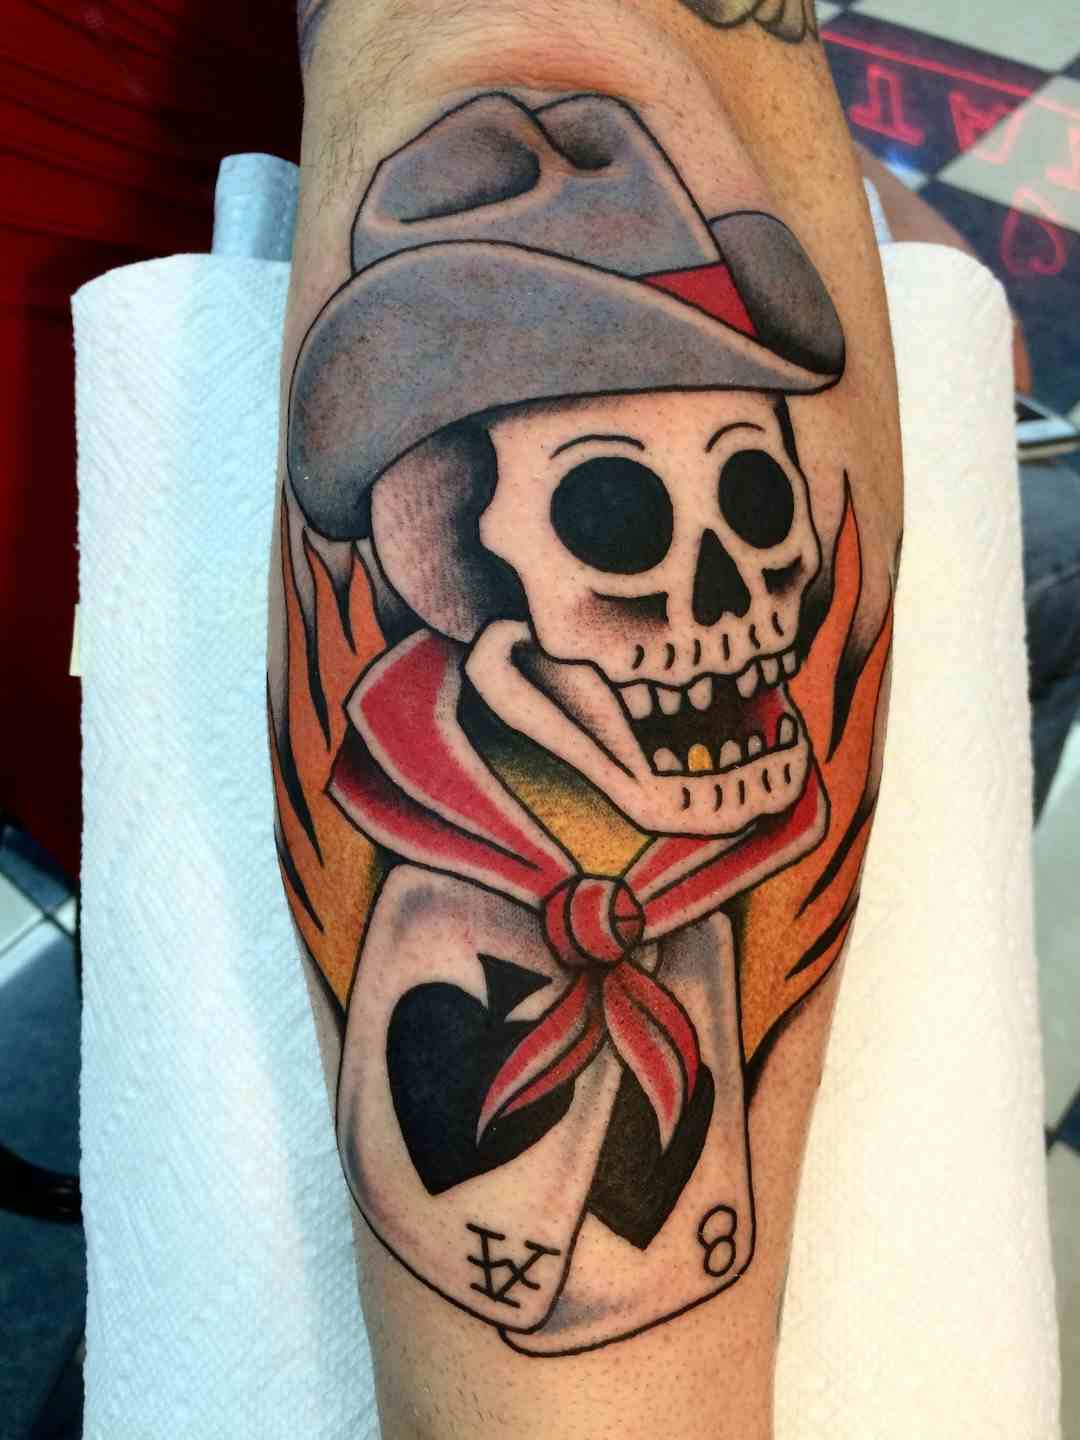 Cowboy skull gambler tattoo